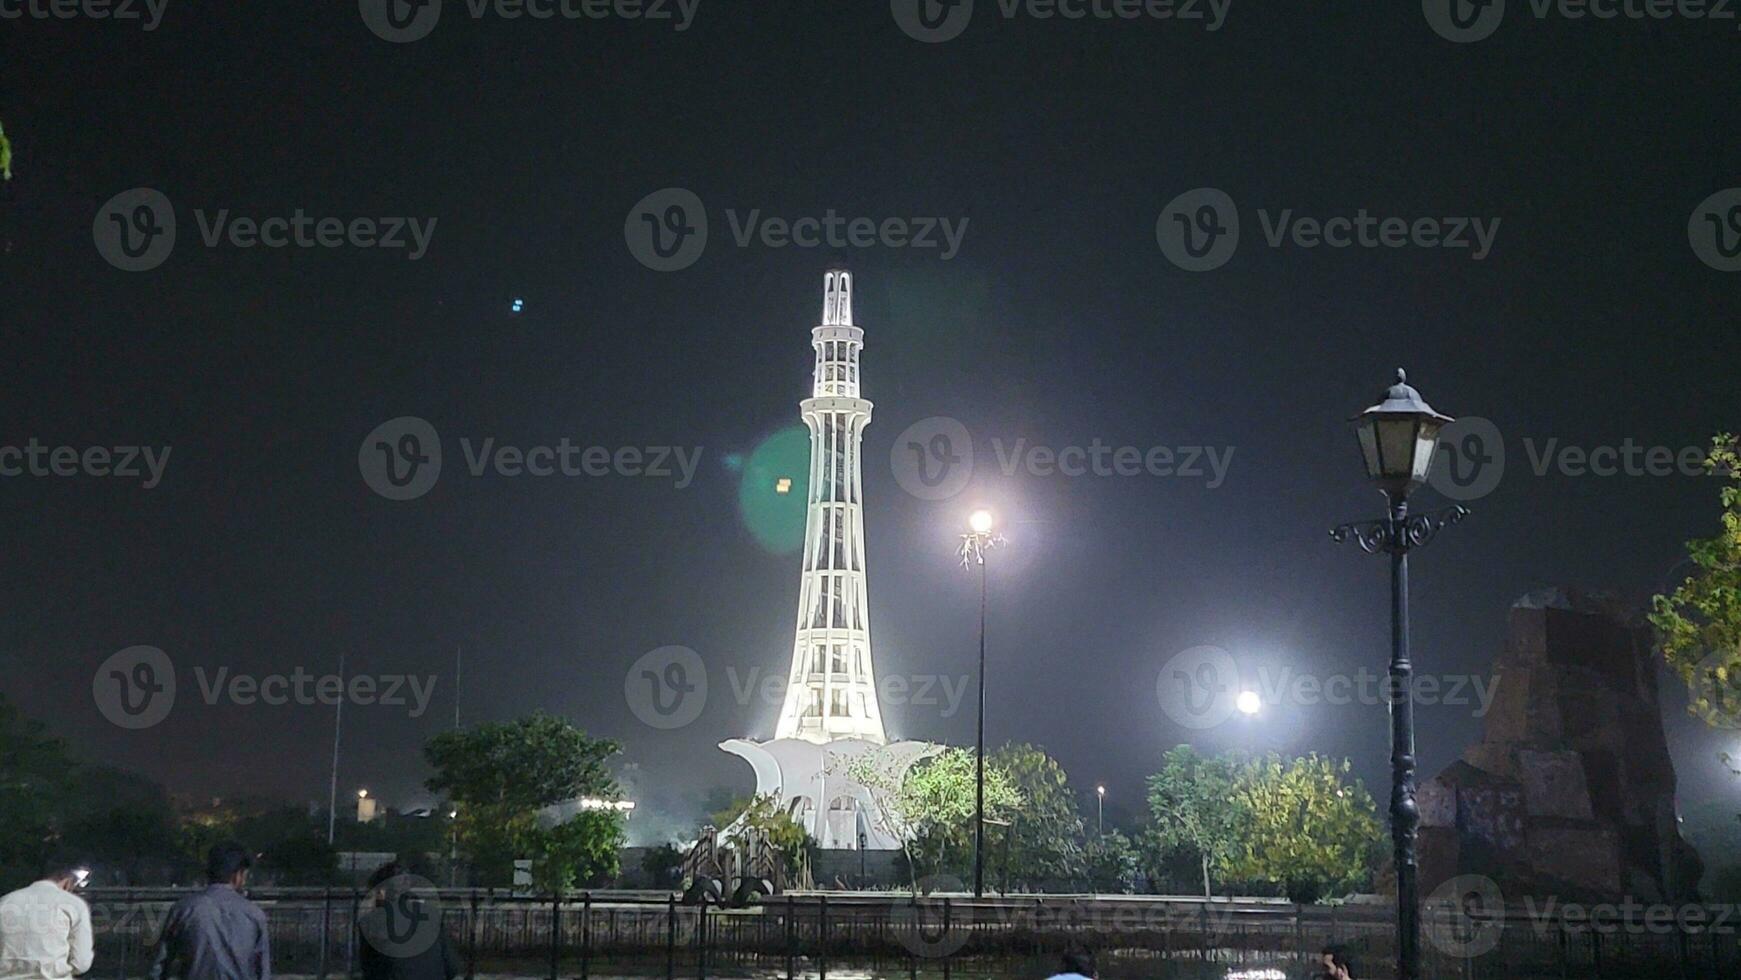 Manar Pakistan showing its beauty at night photo